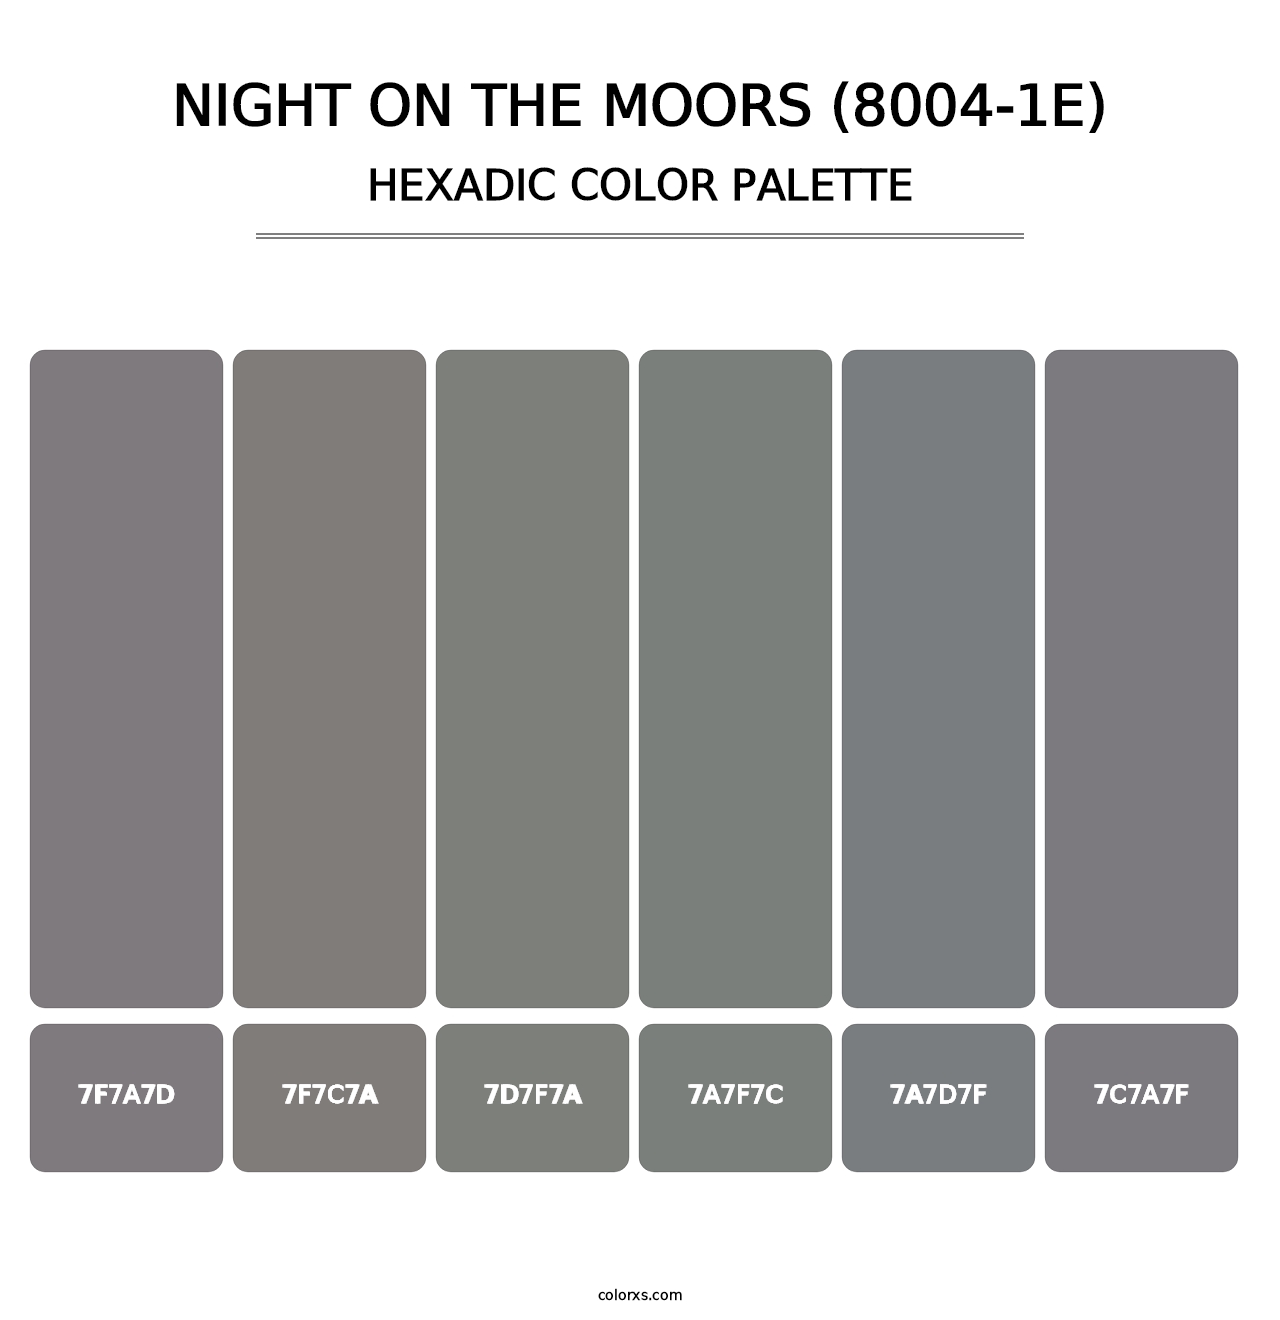 Night on the Moors (8004-1E) - Hexadic Color Palette